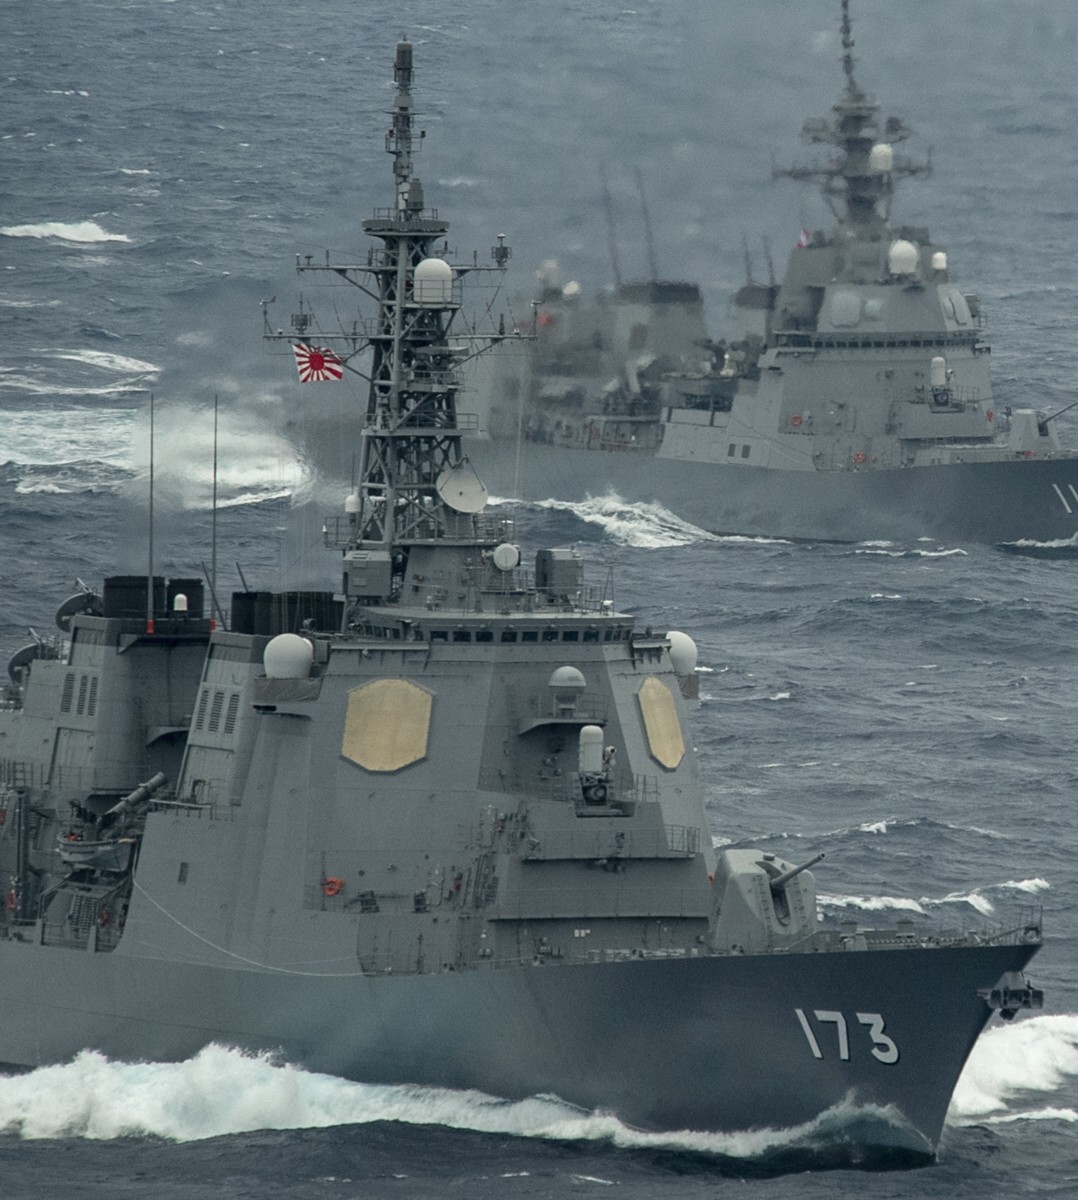 ddg-173 js kongo class guided missile destroyer こんごう aegis japan maritime self defense force jmsdf 25